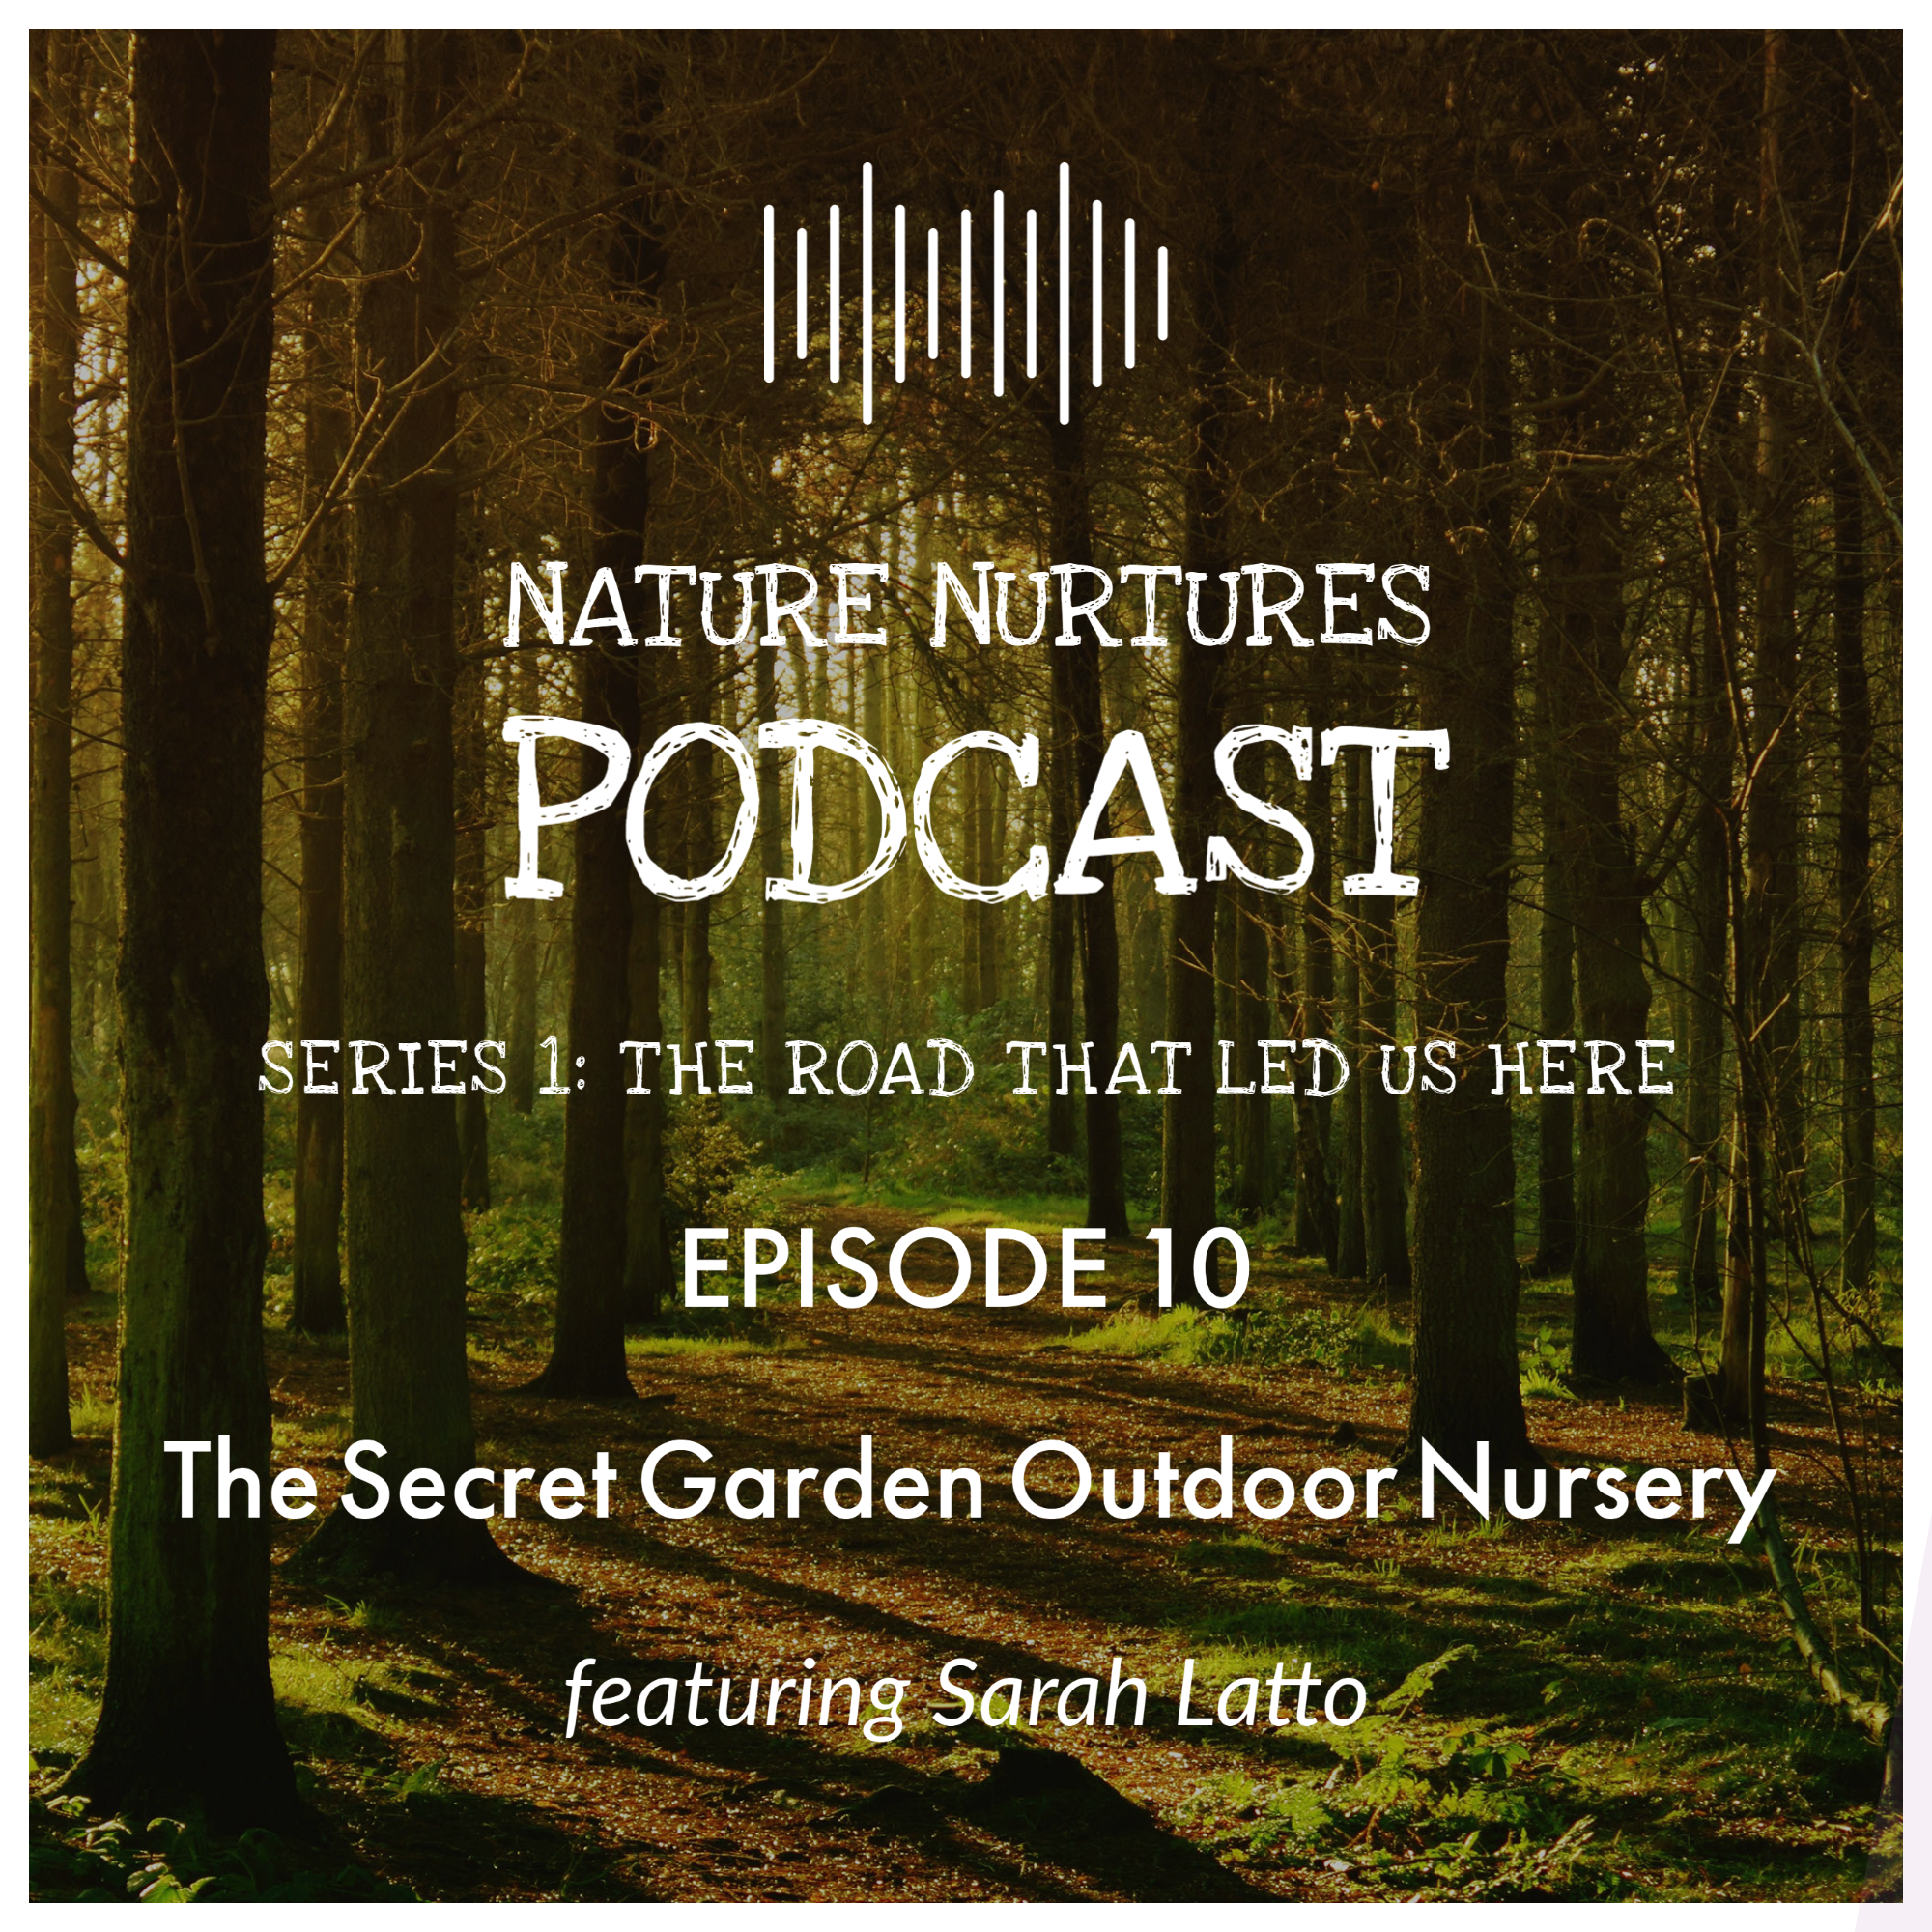 The Secret Garden Outdoor Nursery - the original outdoor nursery